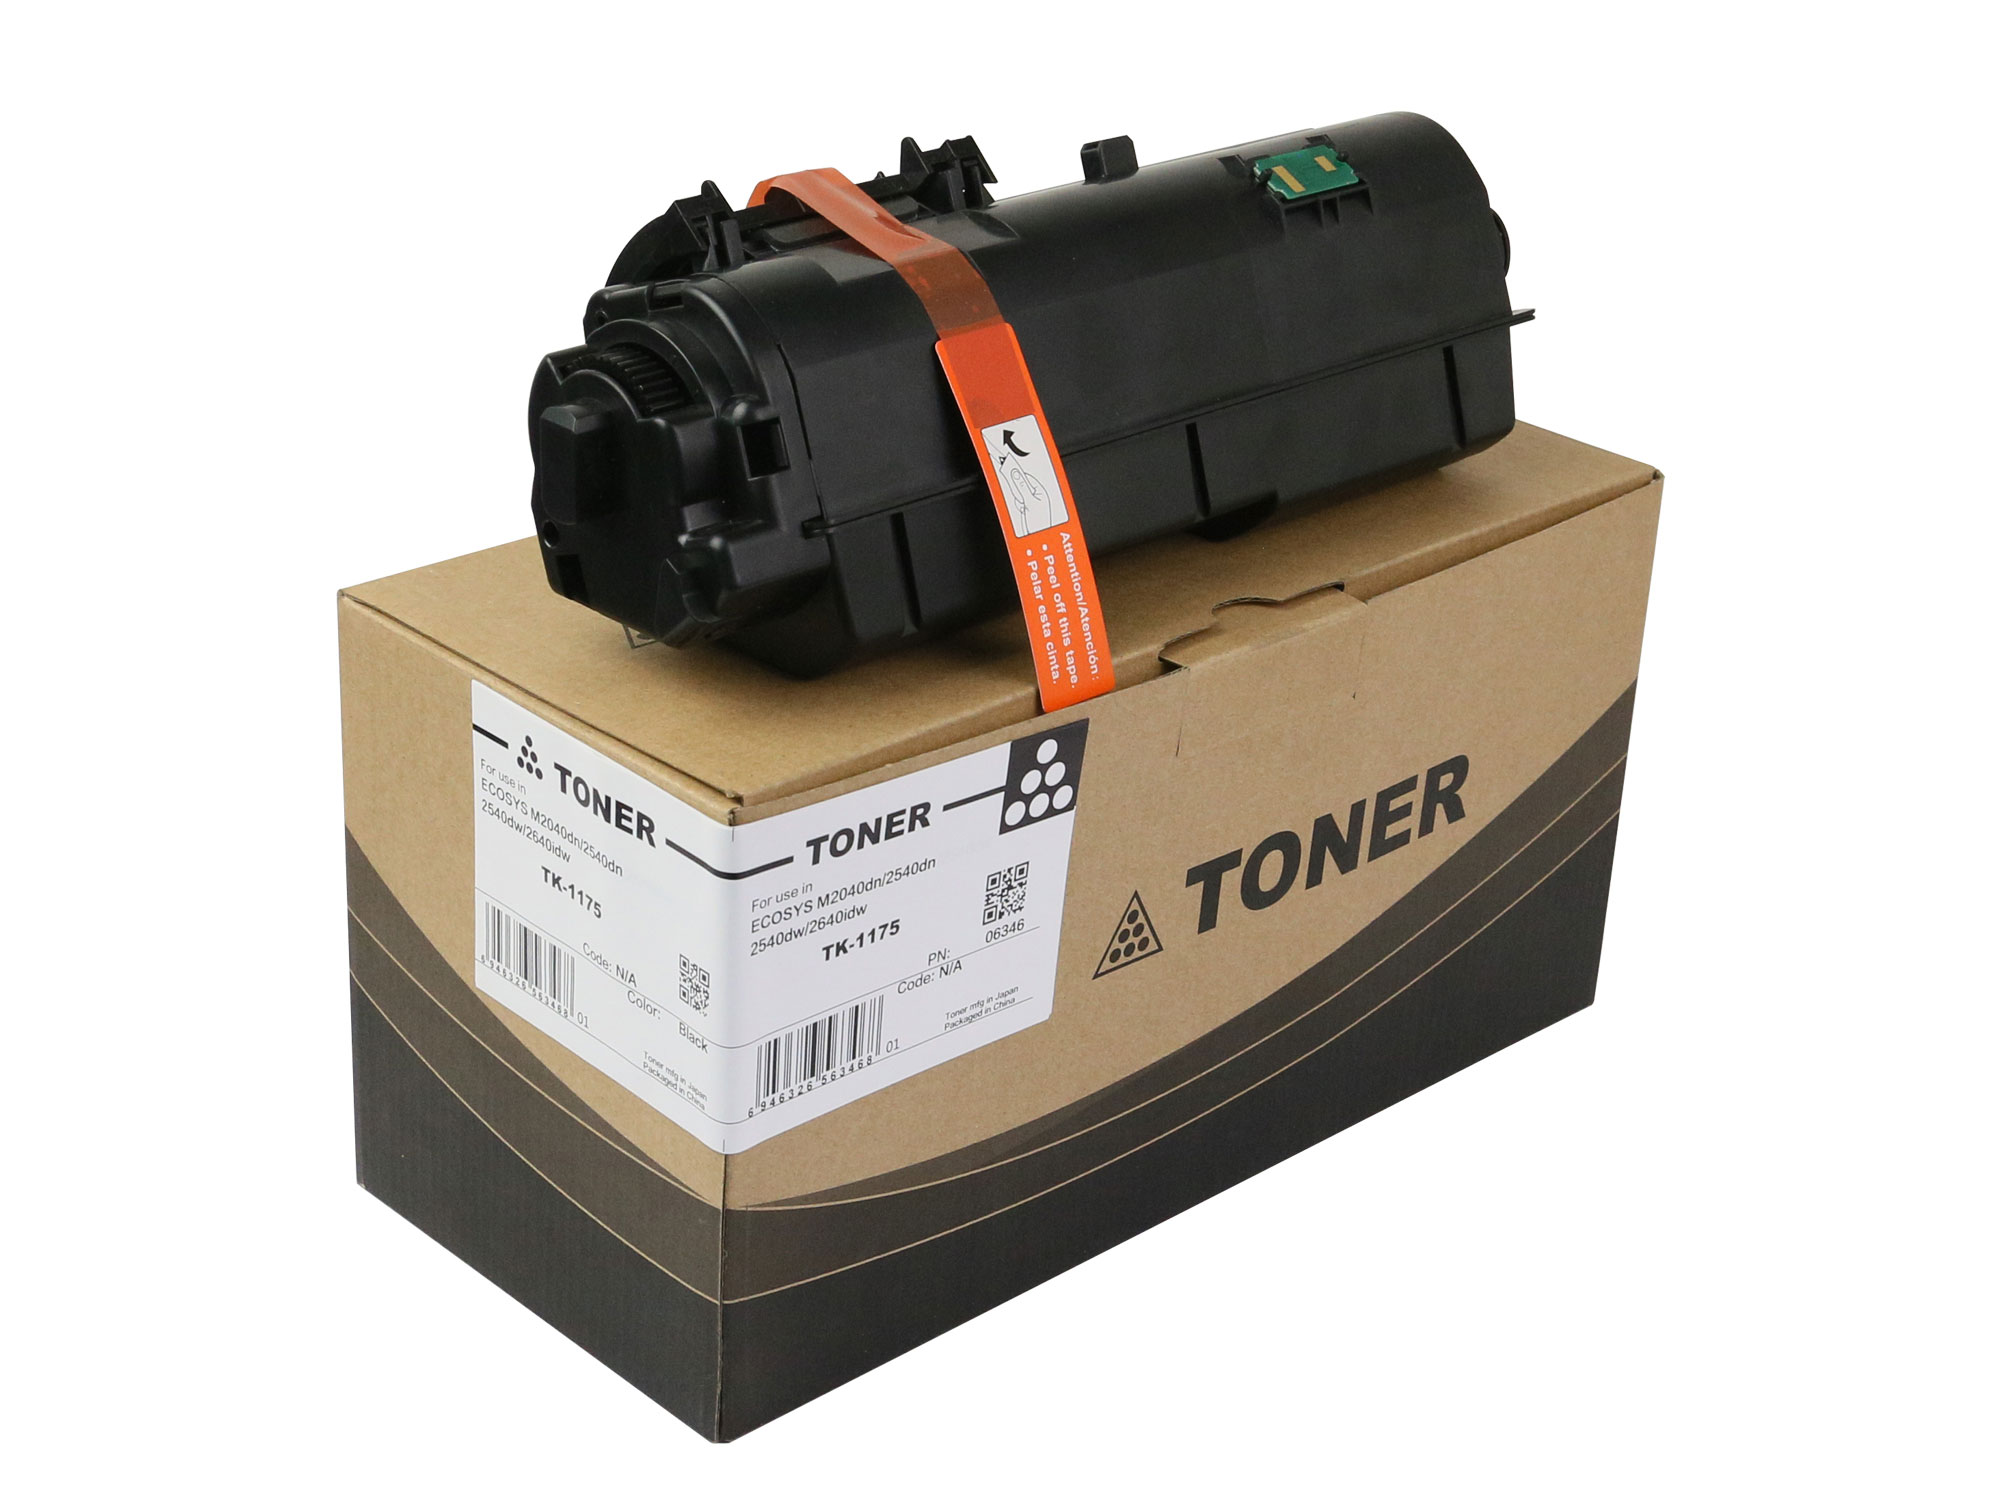 TK-1175 Toner Cartridge for Kyocera ECOSYS M2040dn